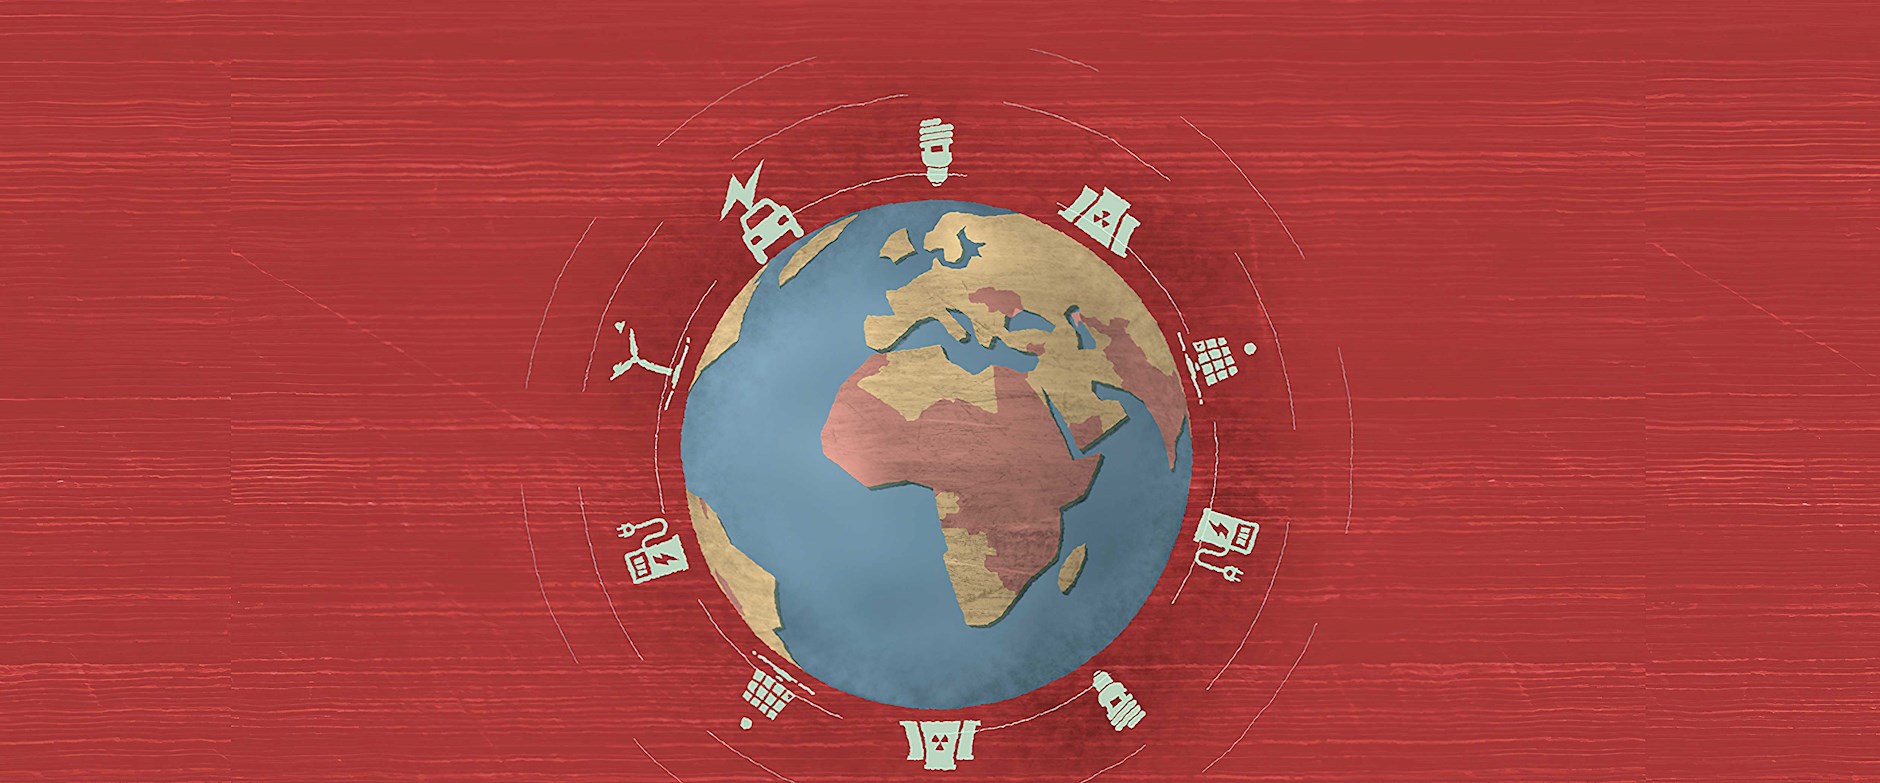 Globe with energy illustrations around the perimeter